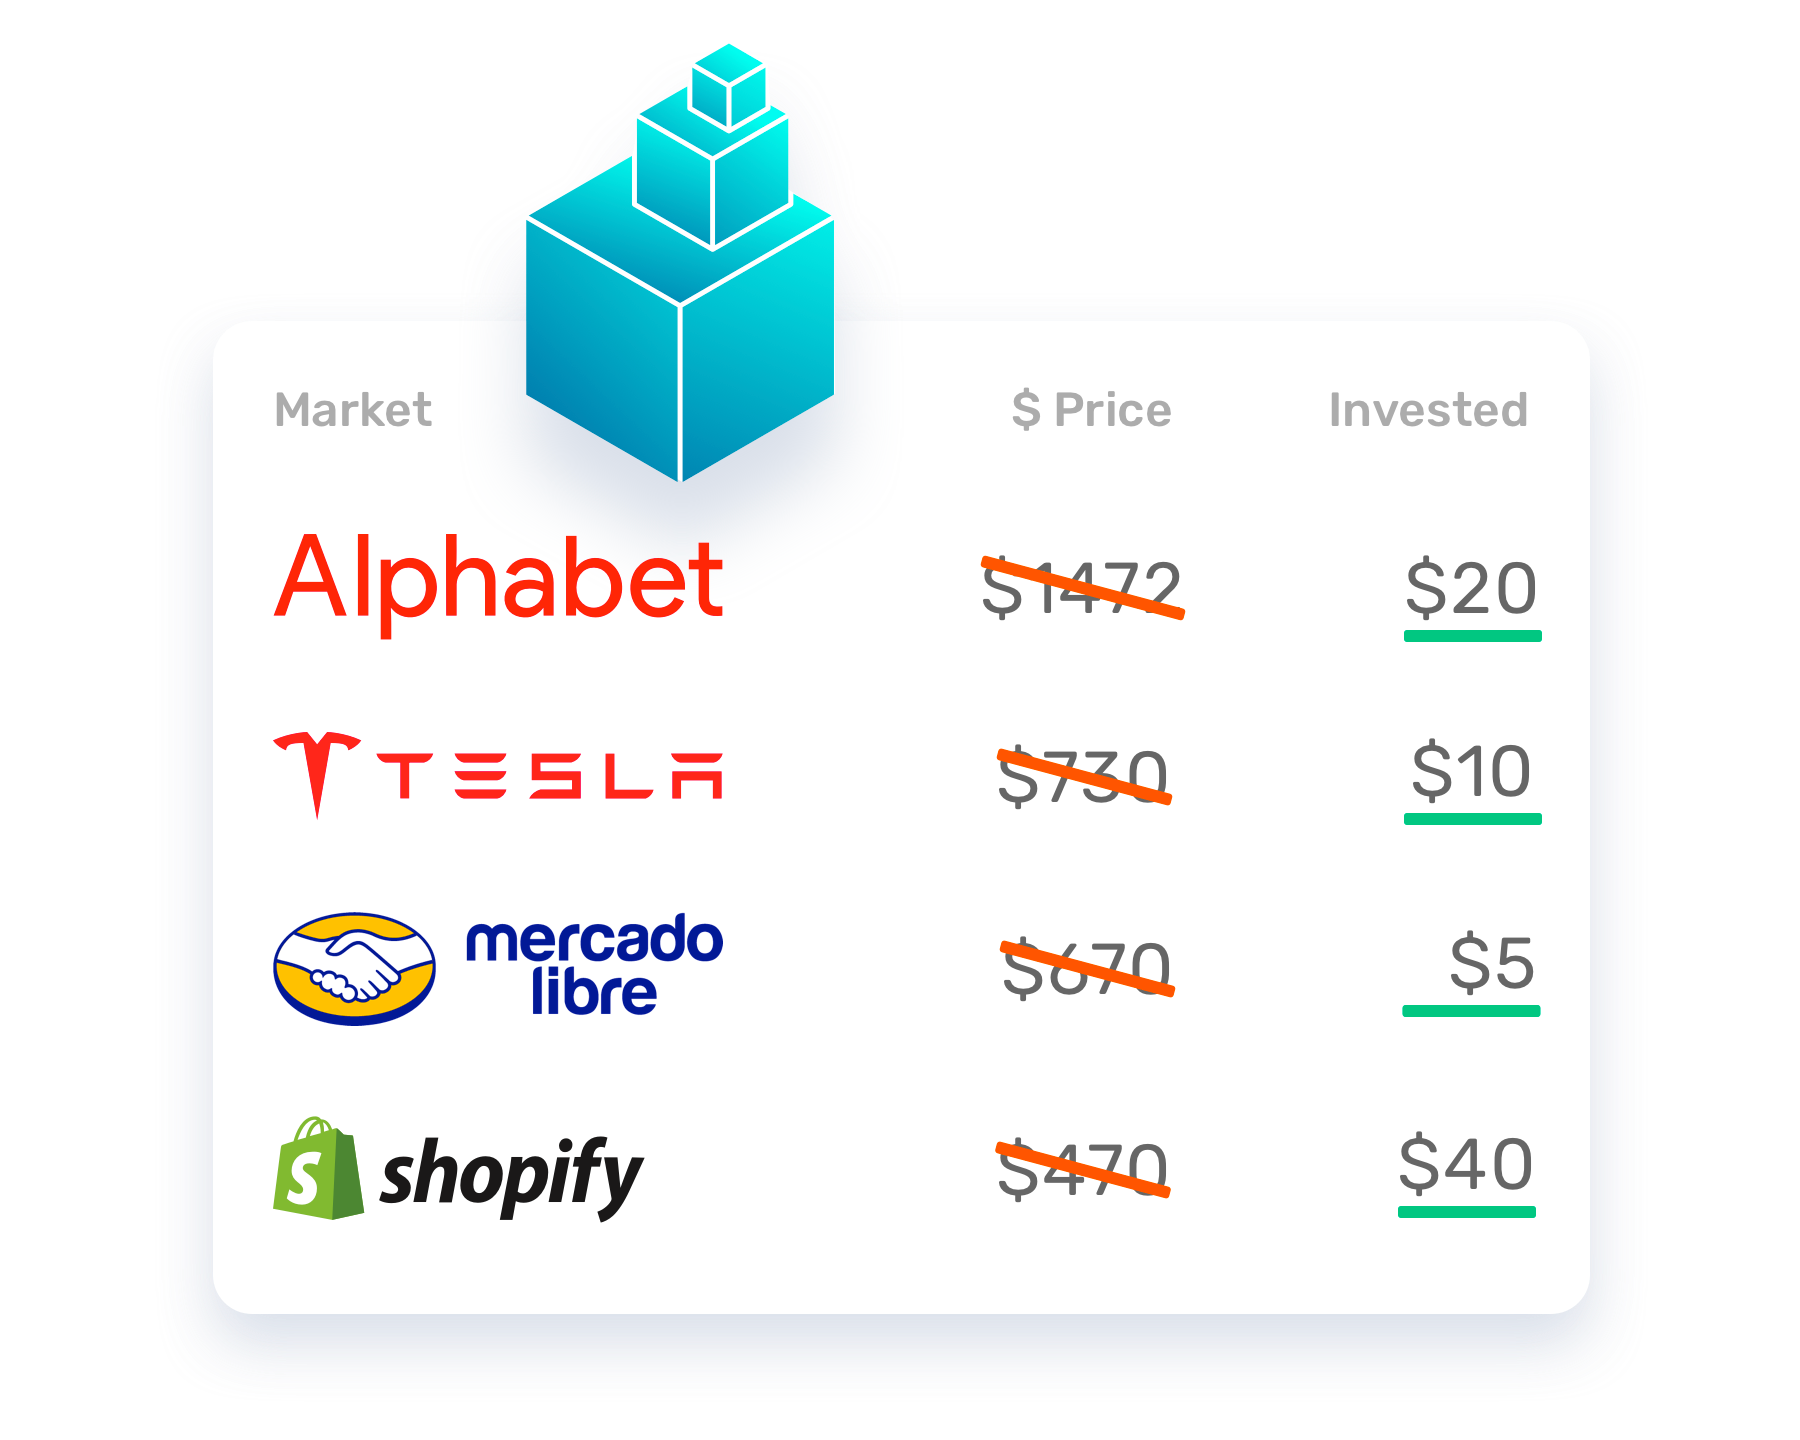 Spend a fraction of the money to buy shares in Alphabet, Tesla, Mercado Libre, or Shopify.